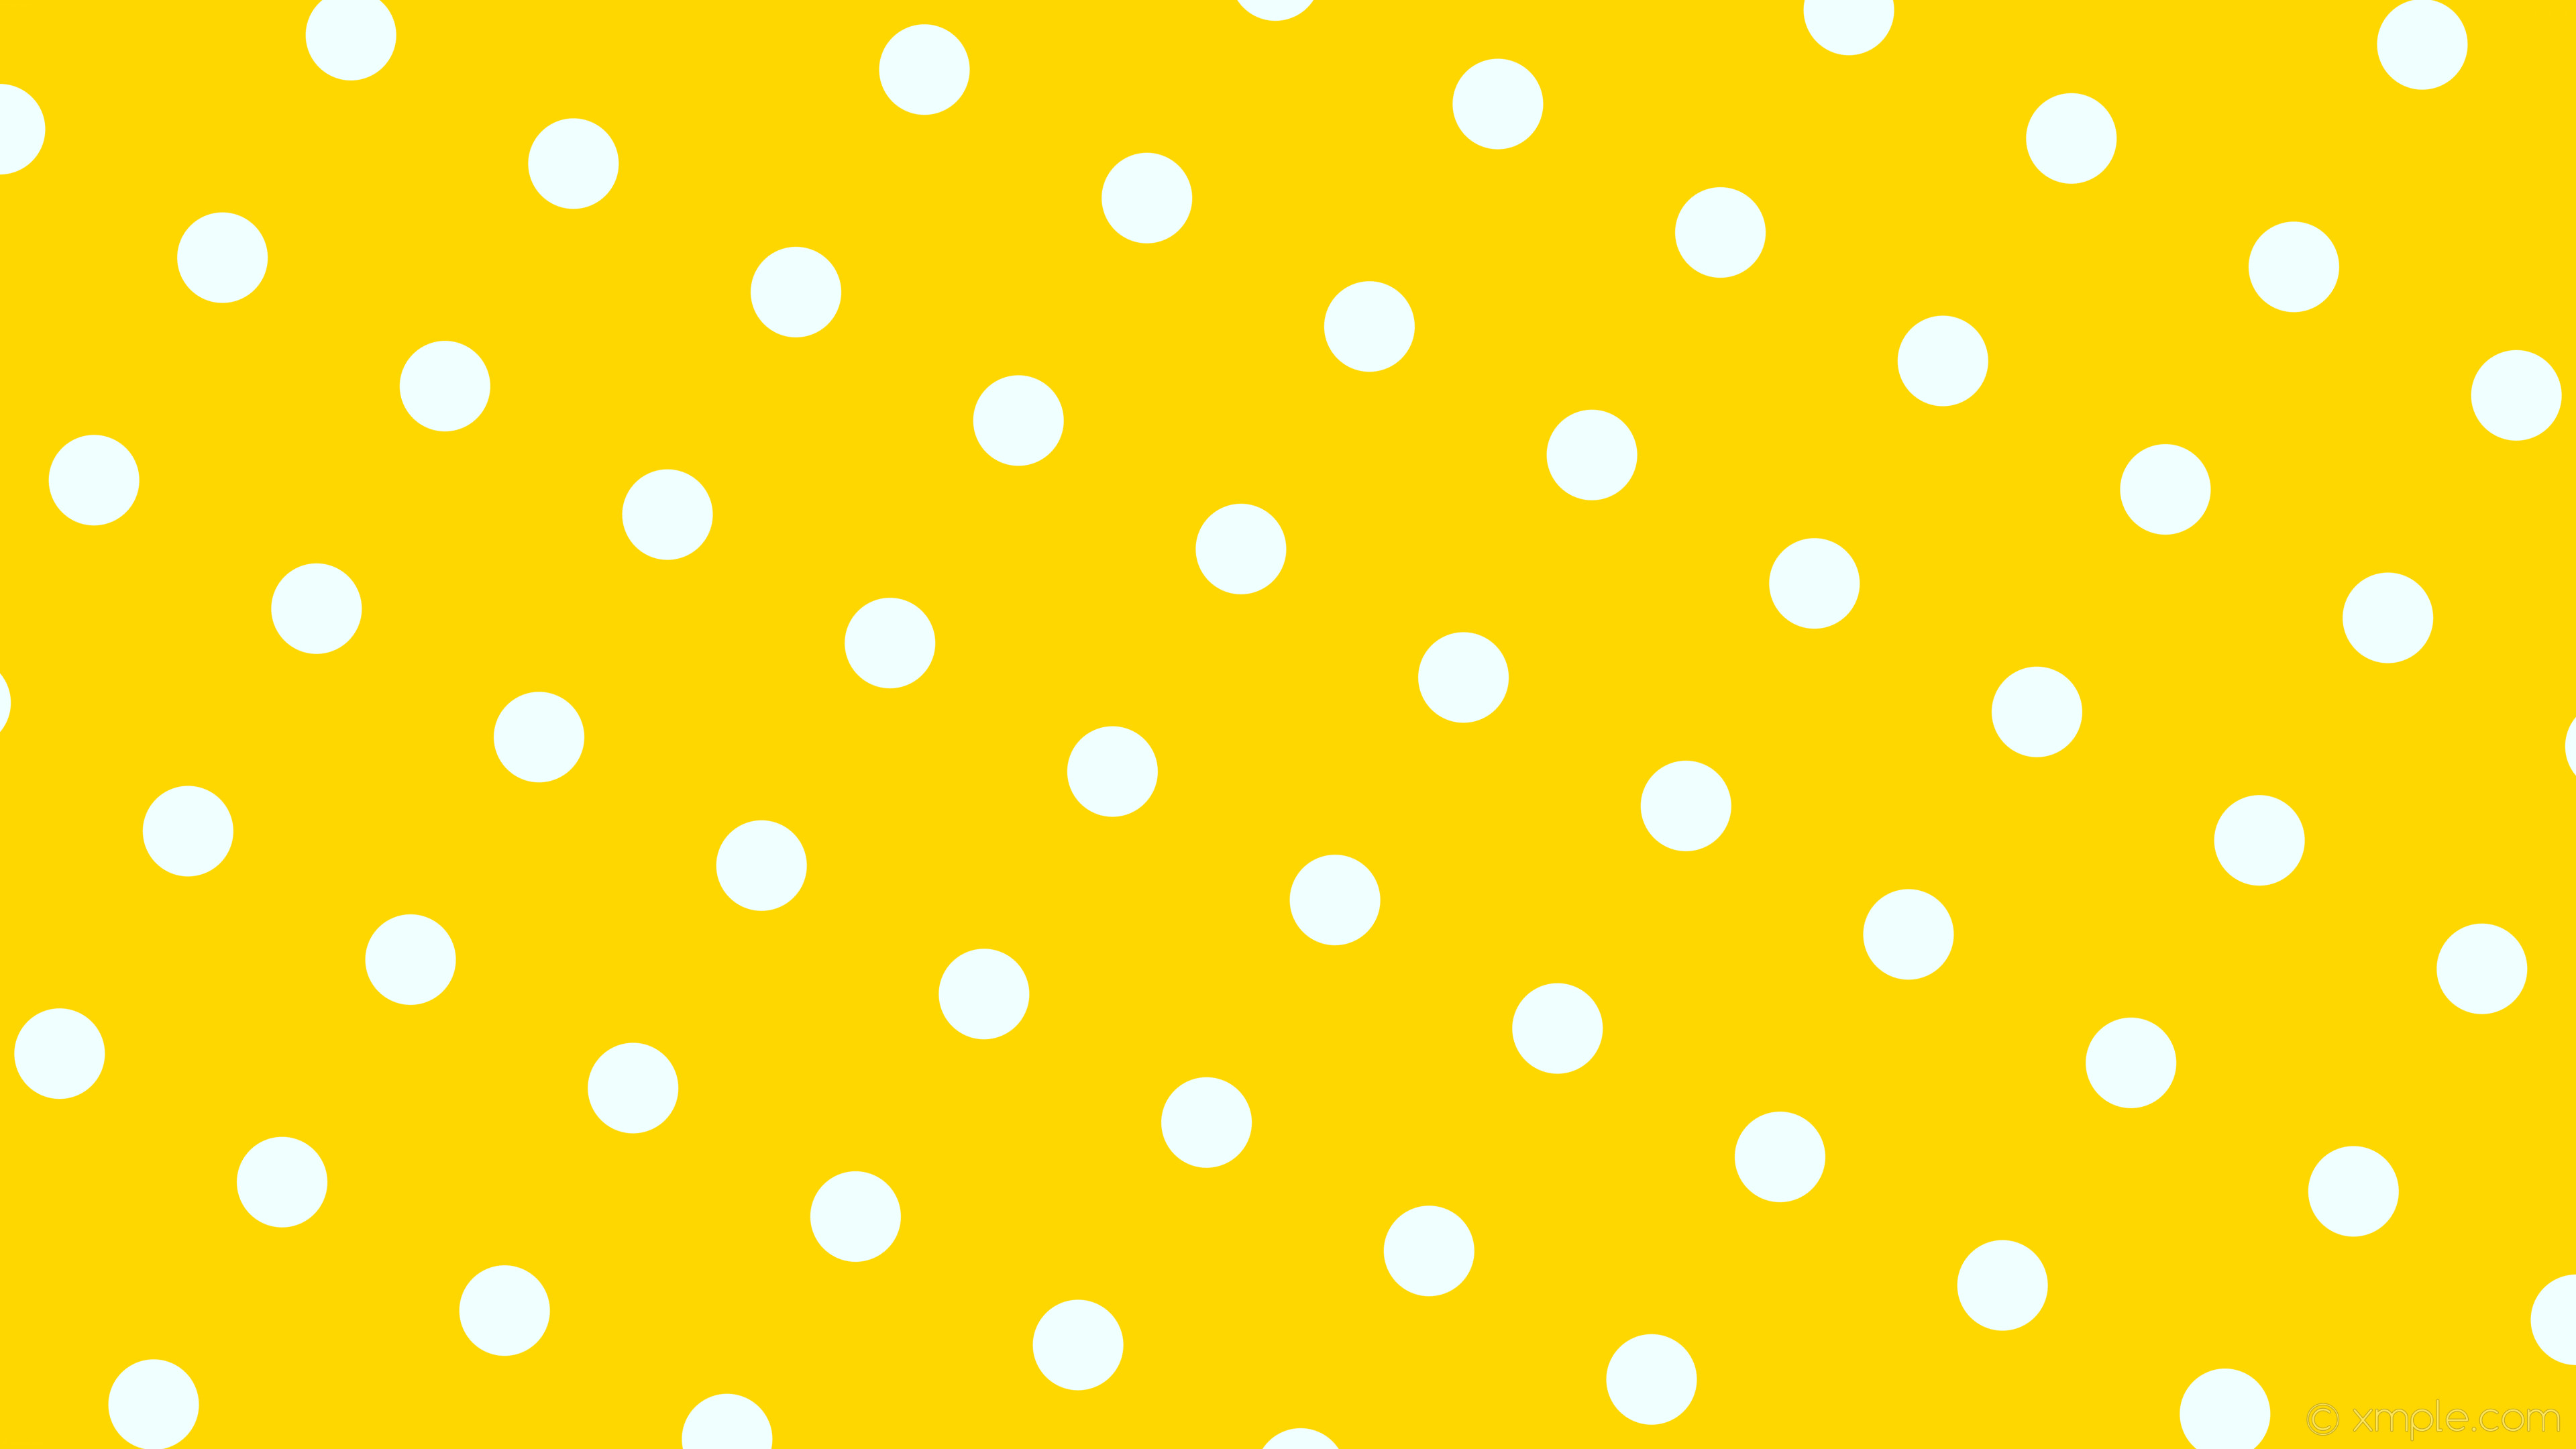 3840x2160 wallpaper polka dots spots yellow white gold azure #ffd700 #f0ffff 150Â°  135px 383px